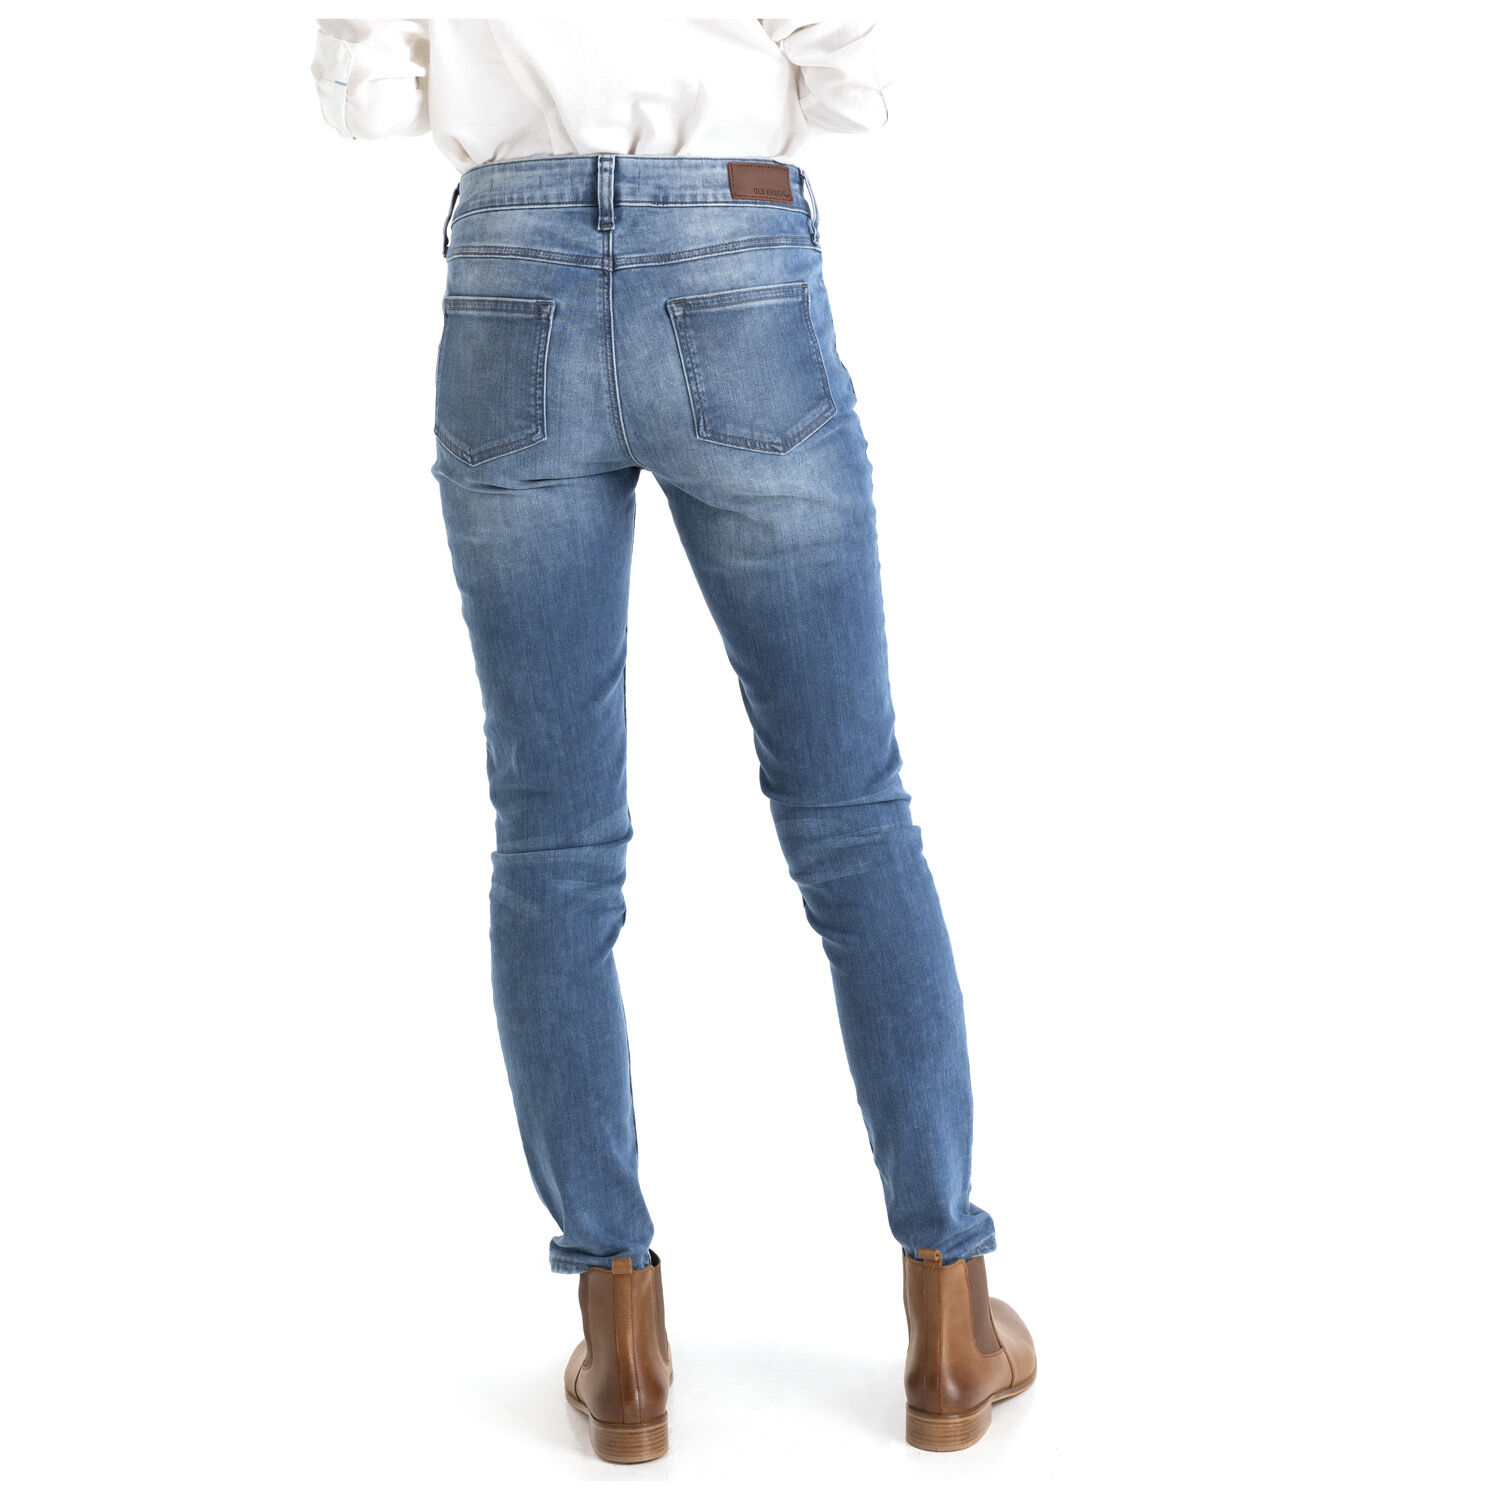 skinny jeans khaki womens